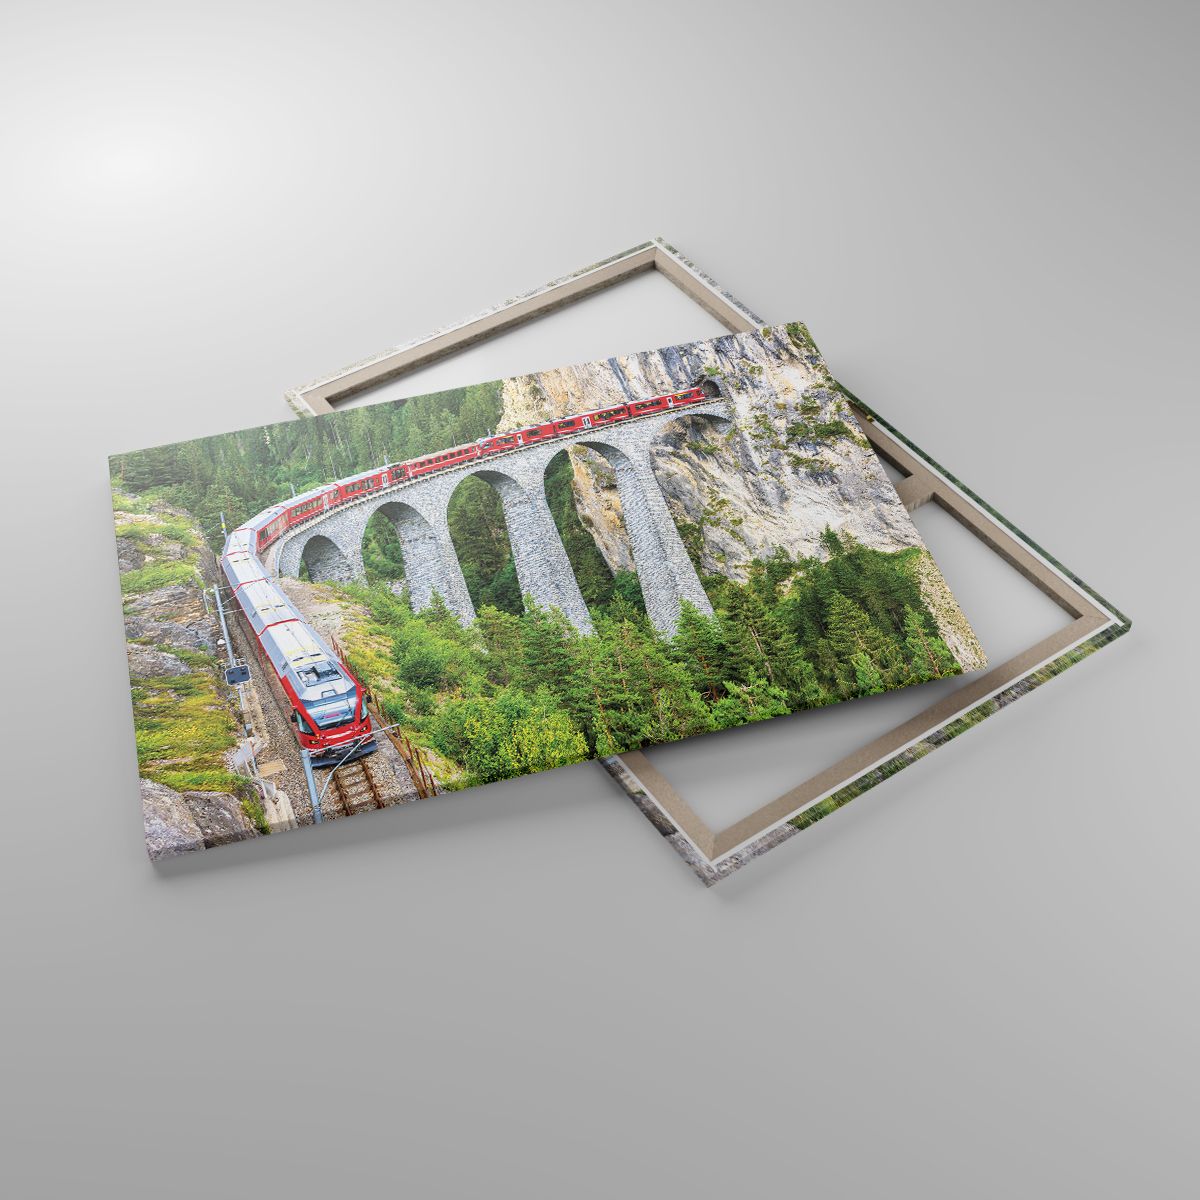 Obrazy Most Kolejowy, Obrazy Krajobraz Górski, Obrazy Pociąg Pasażerski, Obrazy Góry, Obrazy Alpy